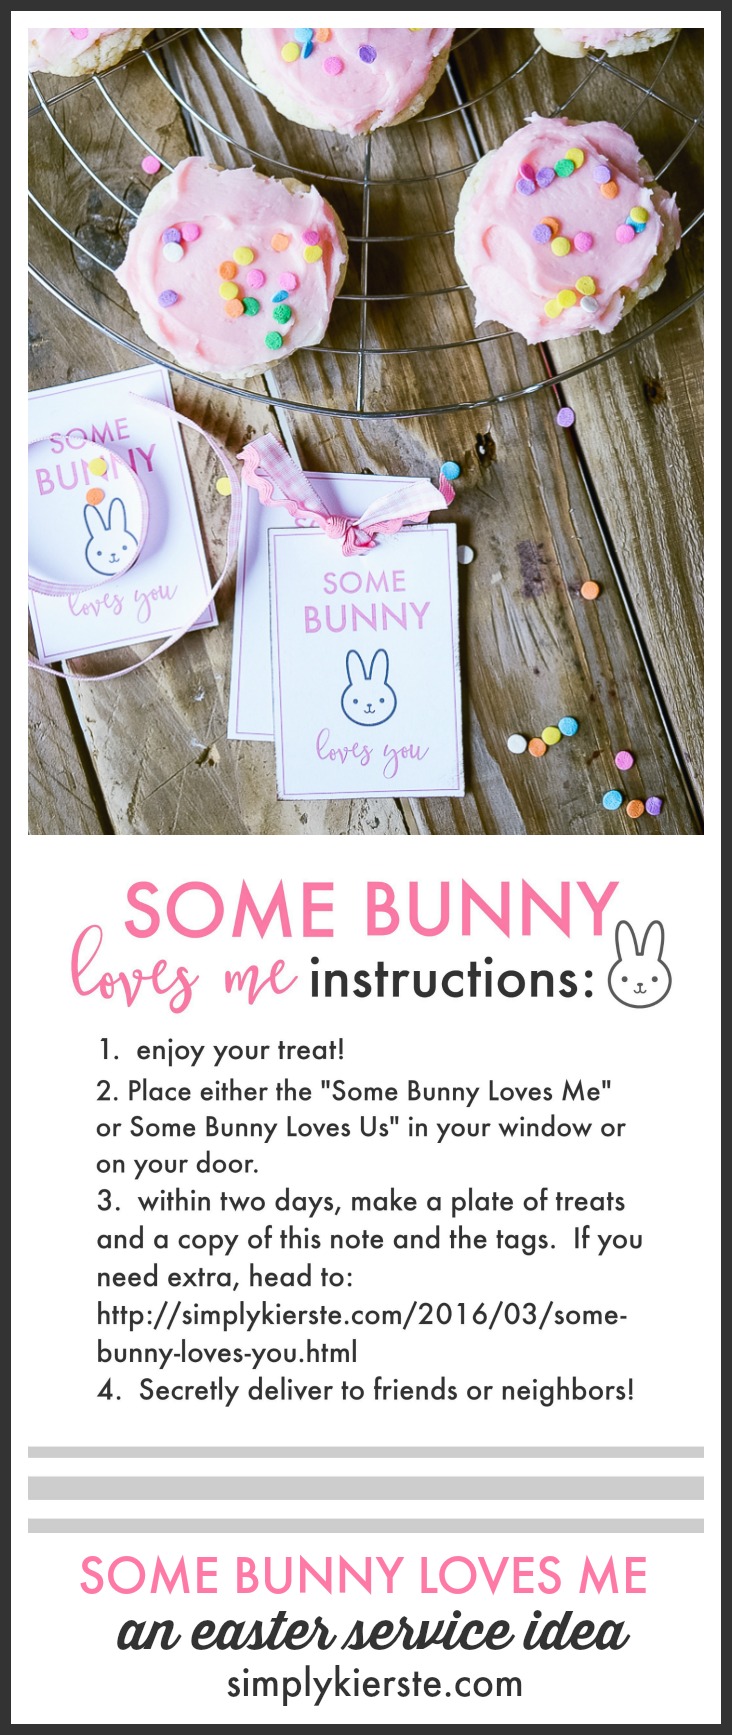 Some Bunny Loves You | An Easter Service Idea | oldsaltfarm.com